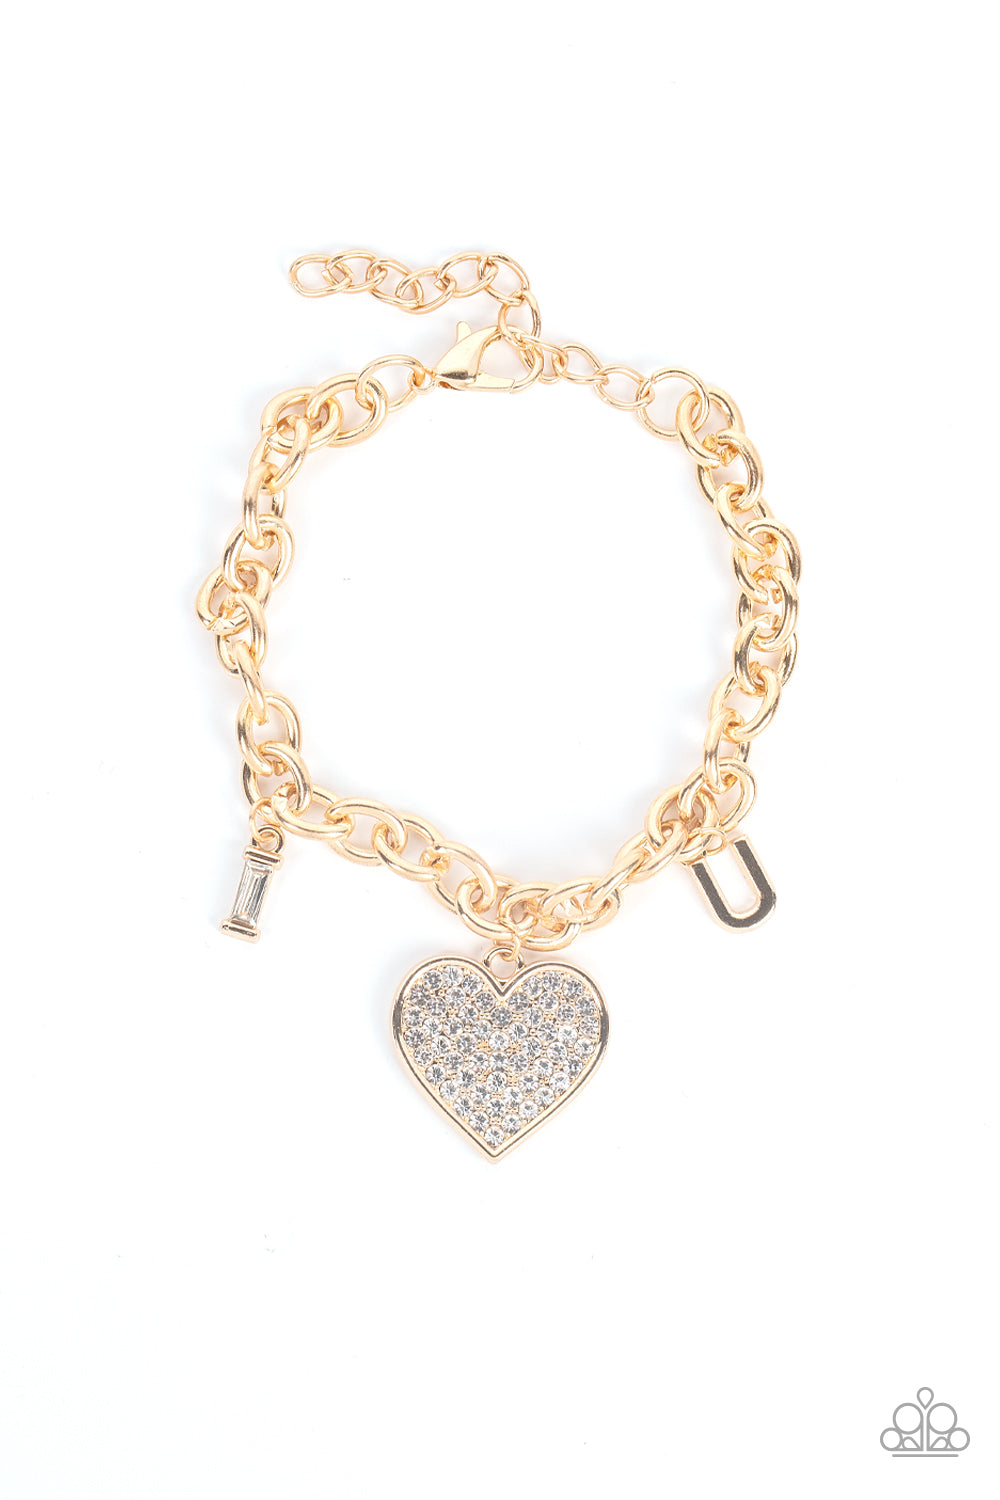 Declaration of Love - Gold Bracelet - Paparazzi Accessories - Paparazzi Accessories 